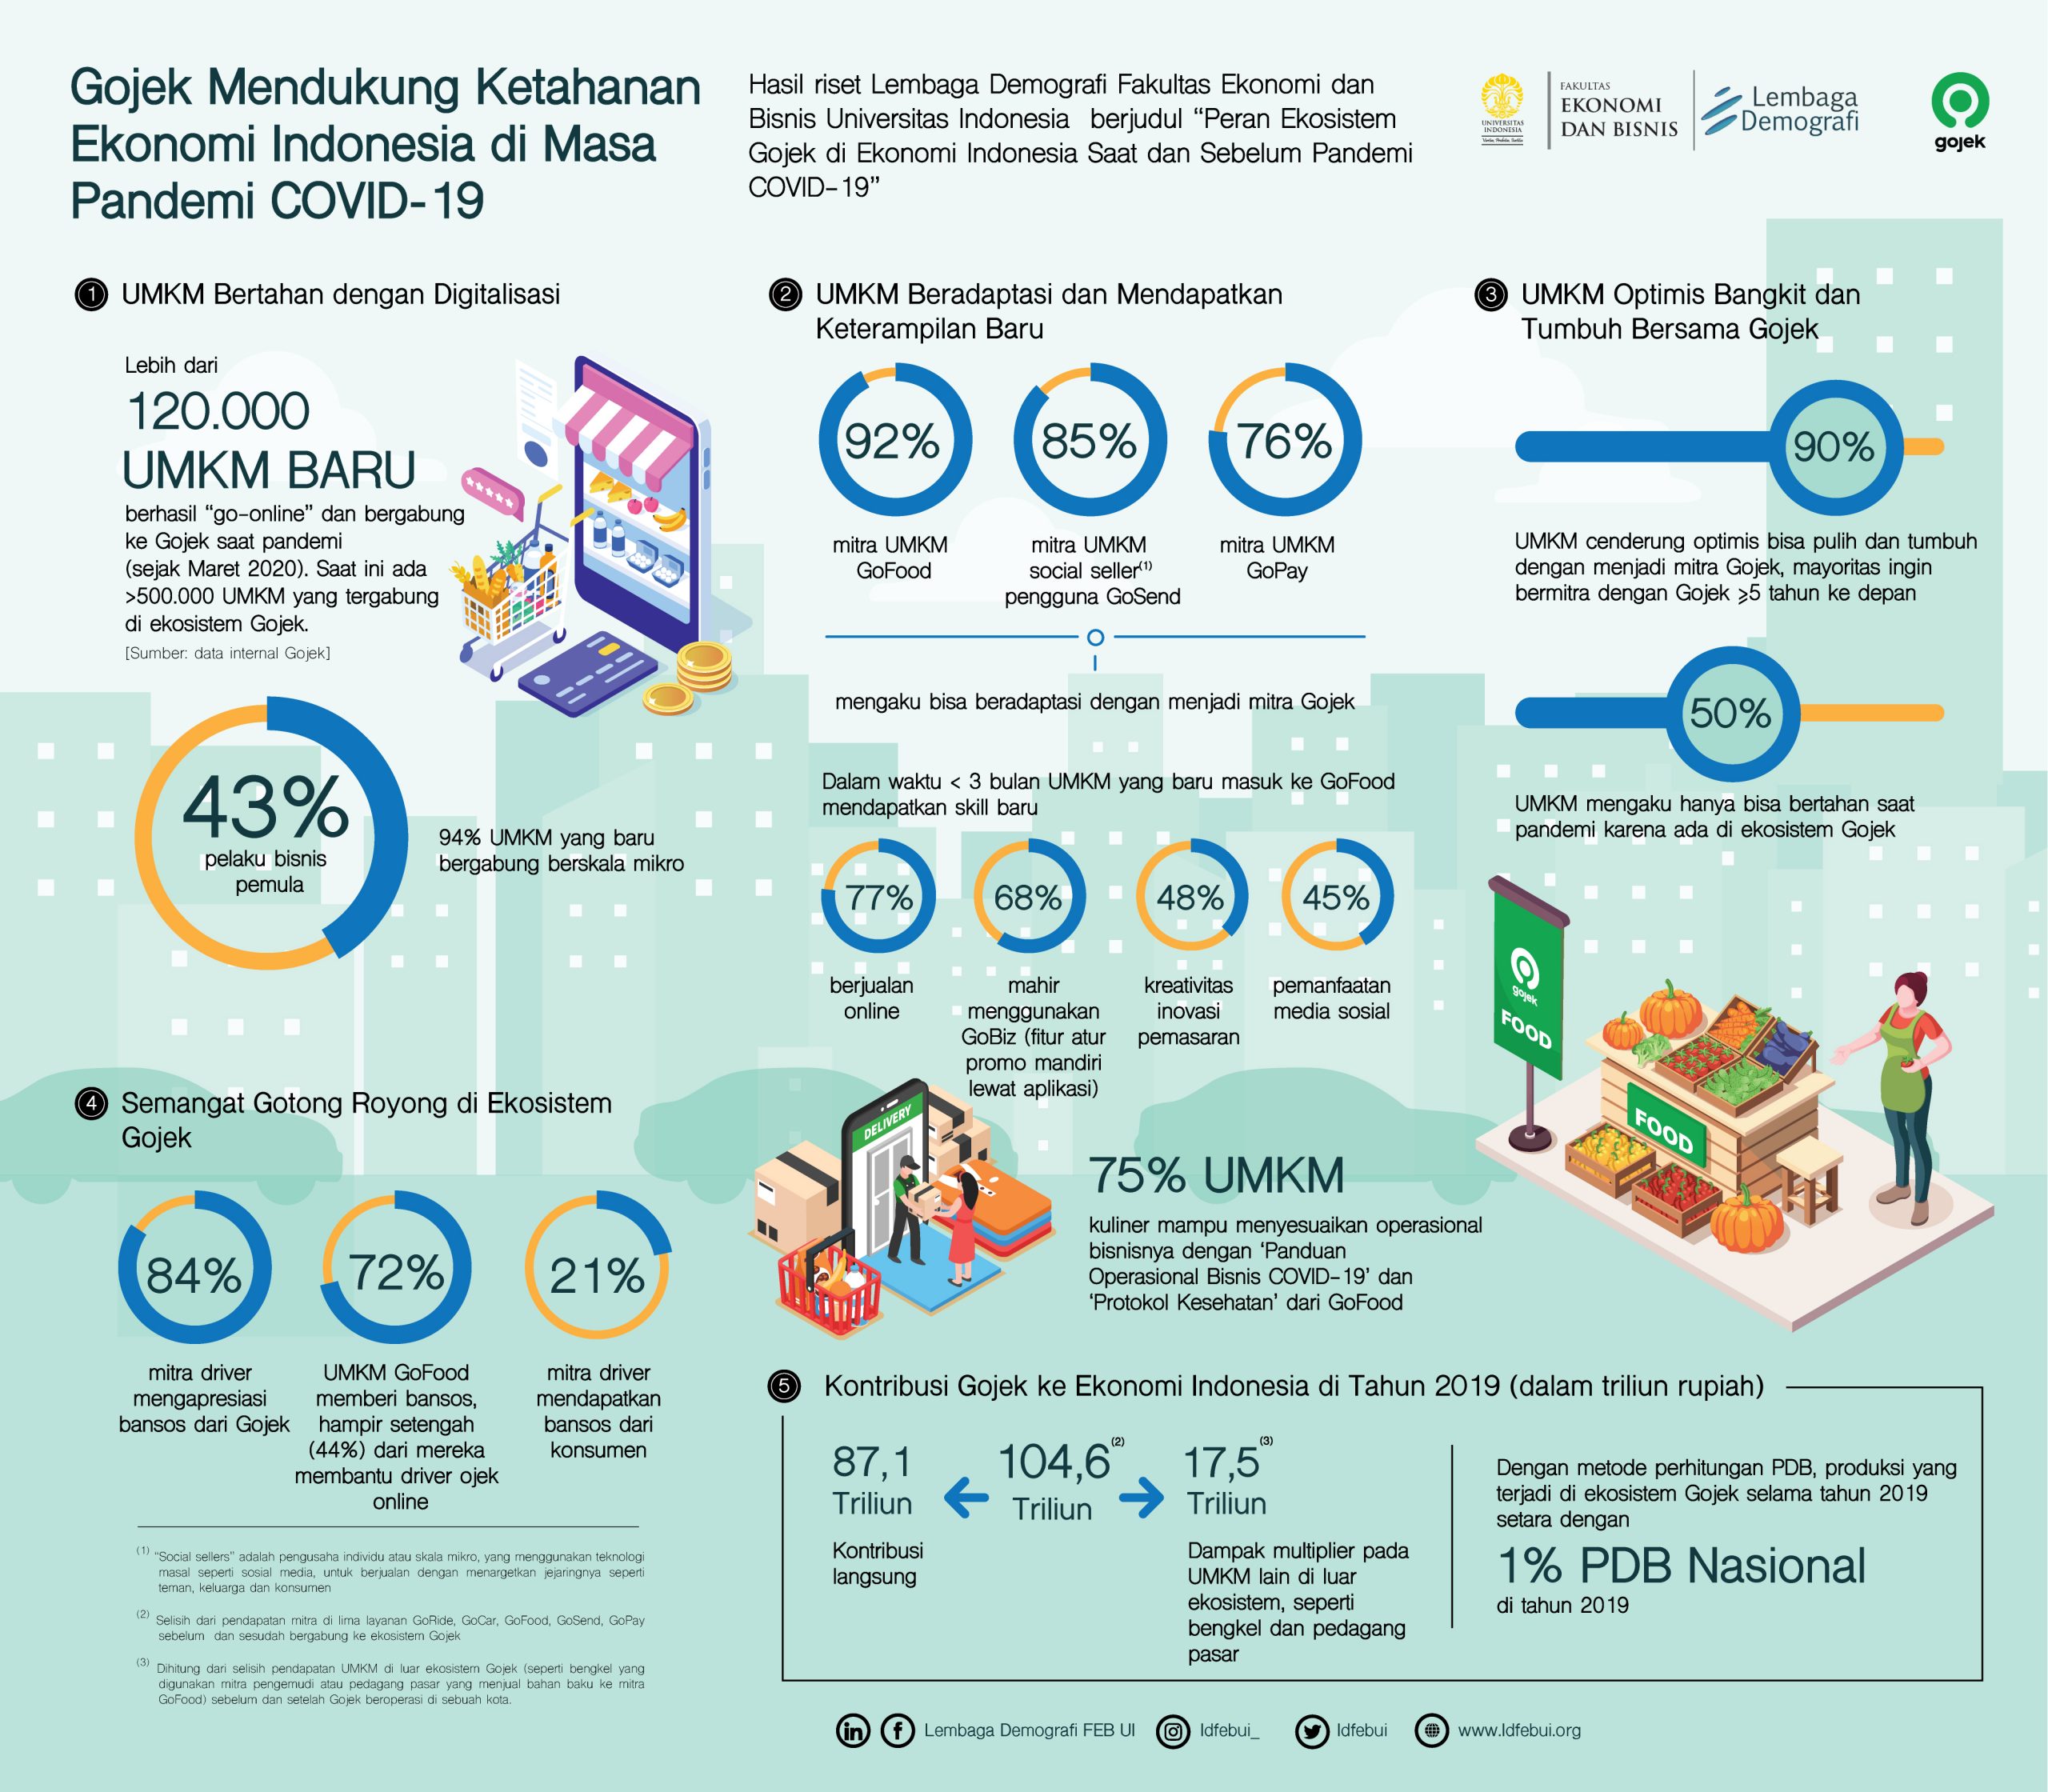 Gojek contributed USD 7.1 billions to Indonesia's economy in 2019